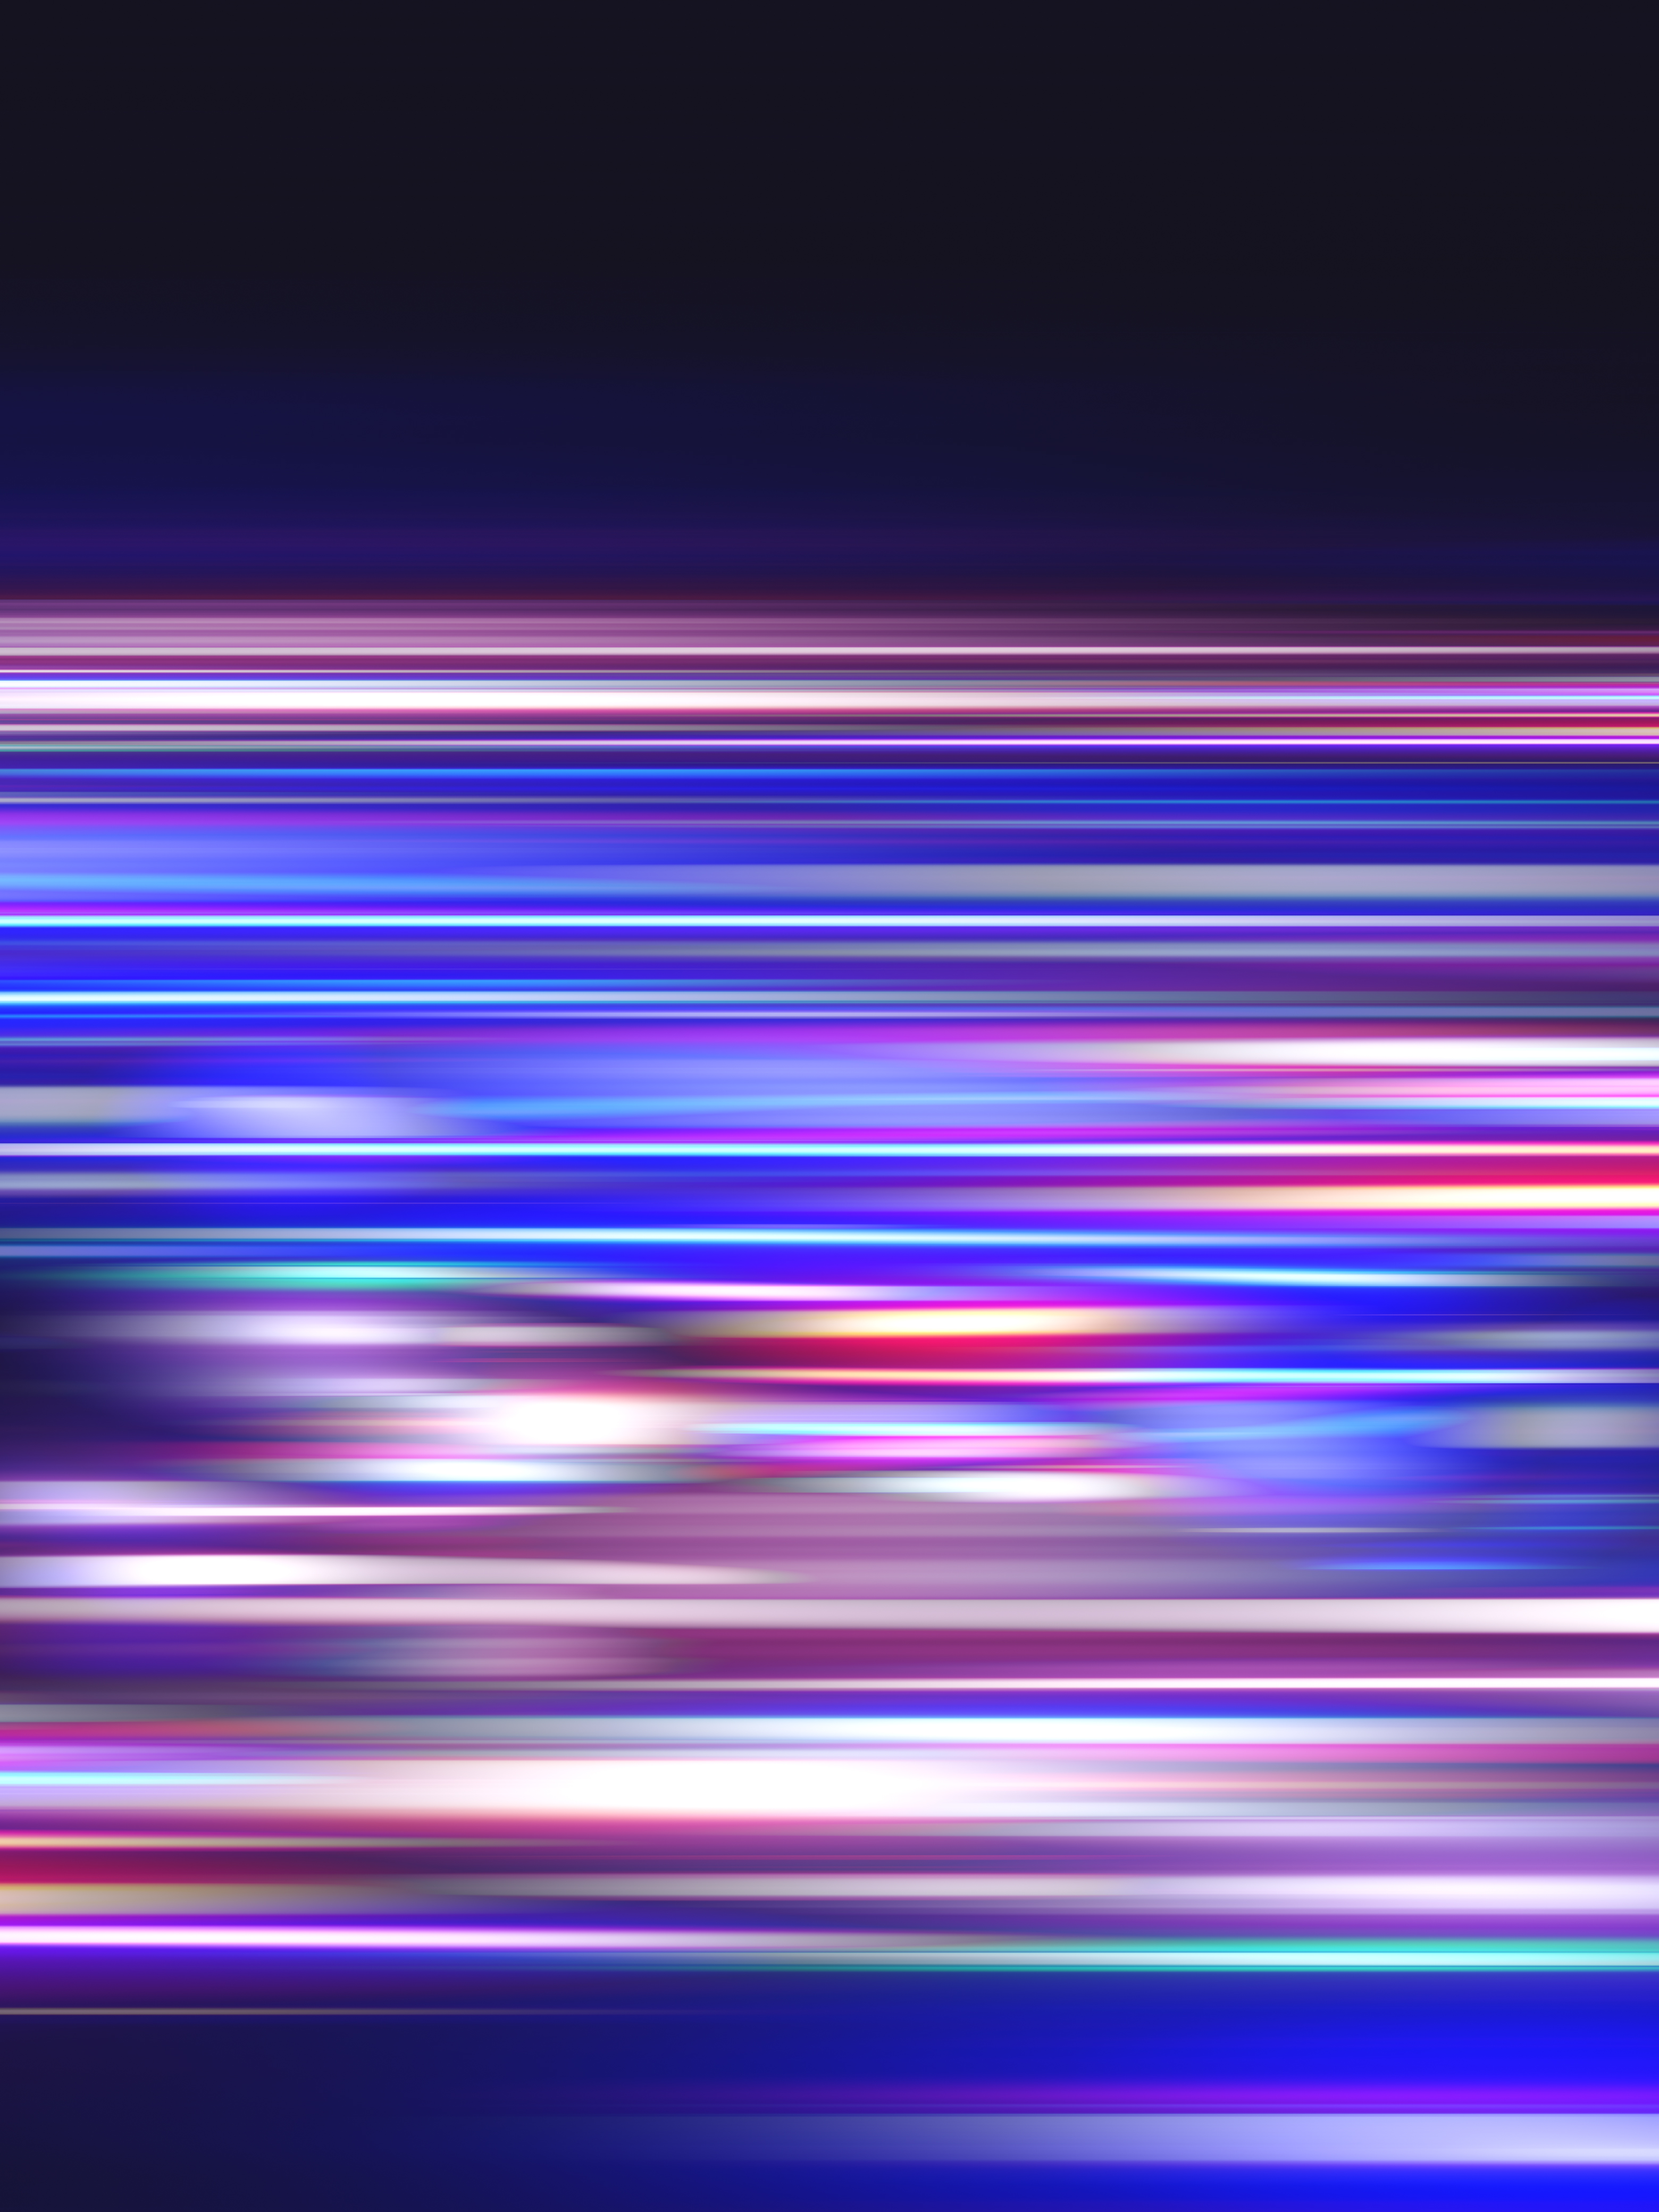 General 3120x4160 neon Plexus colorful red blue purple lines glowing digital art portrait display